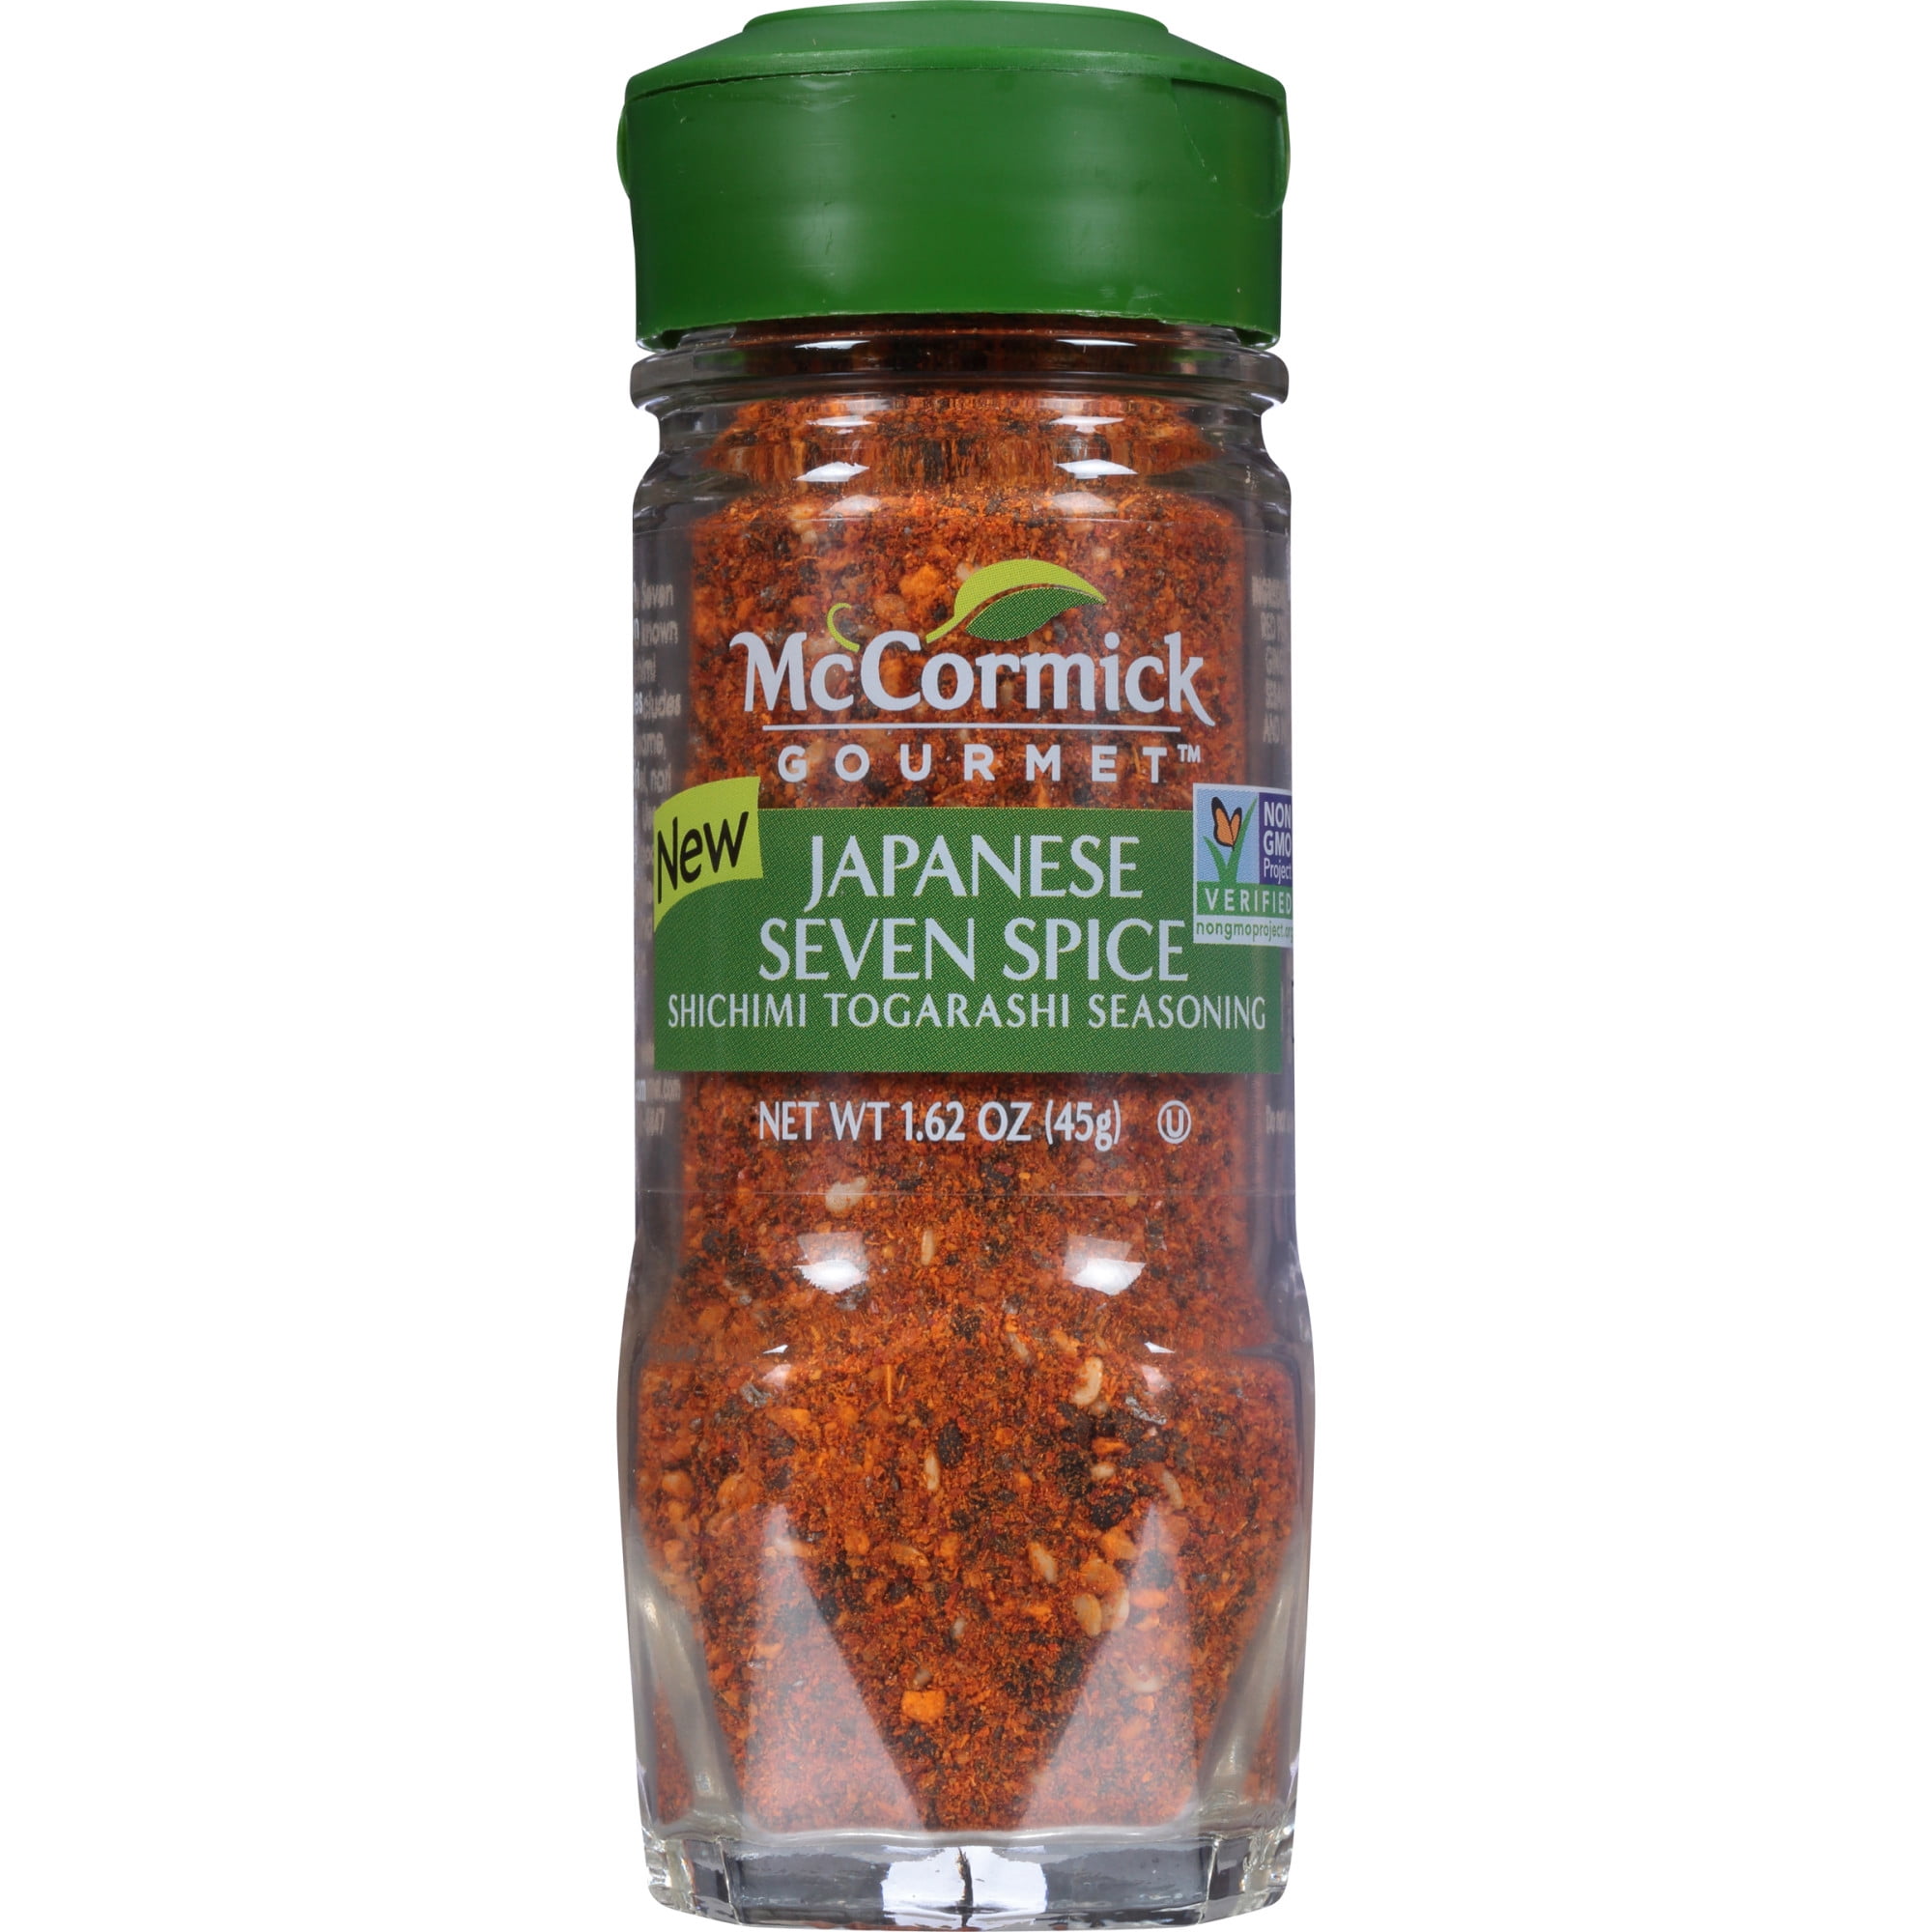 McCormick Gourmet Japanese 7 Spice Seasoning, 1.62 oz Mixed Spices &  Seasonings 